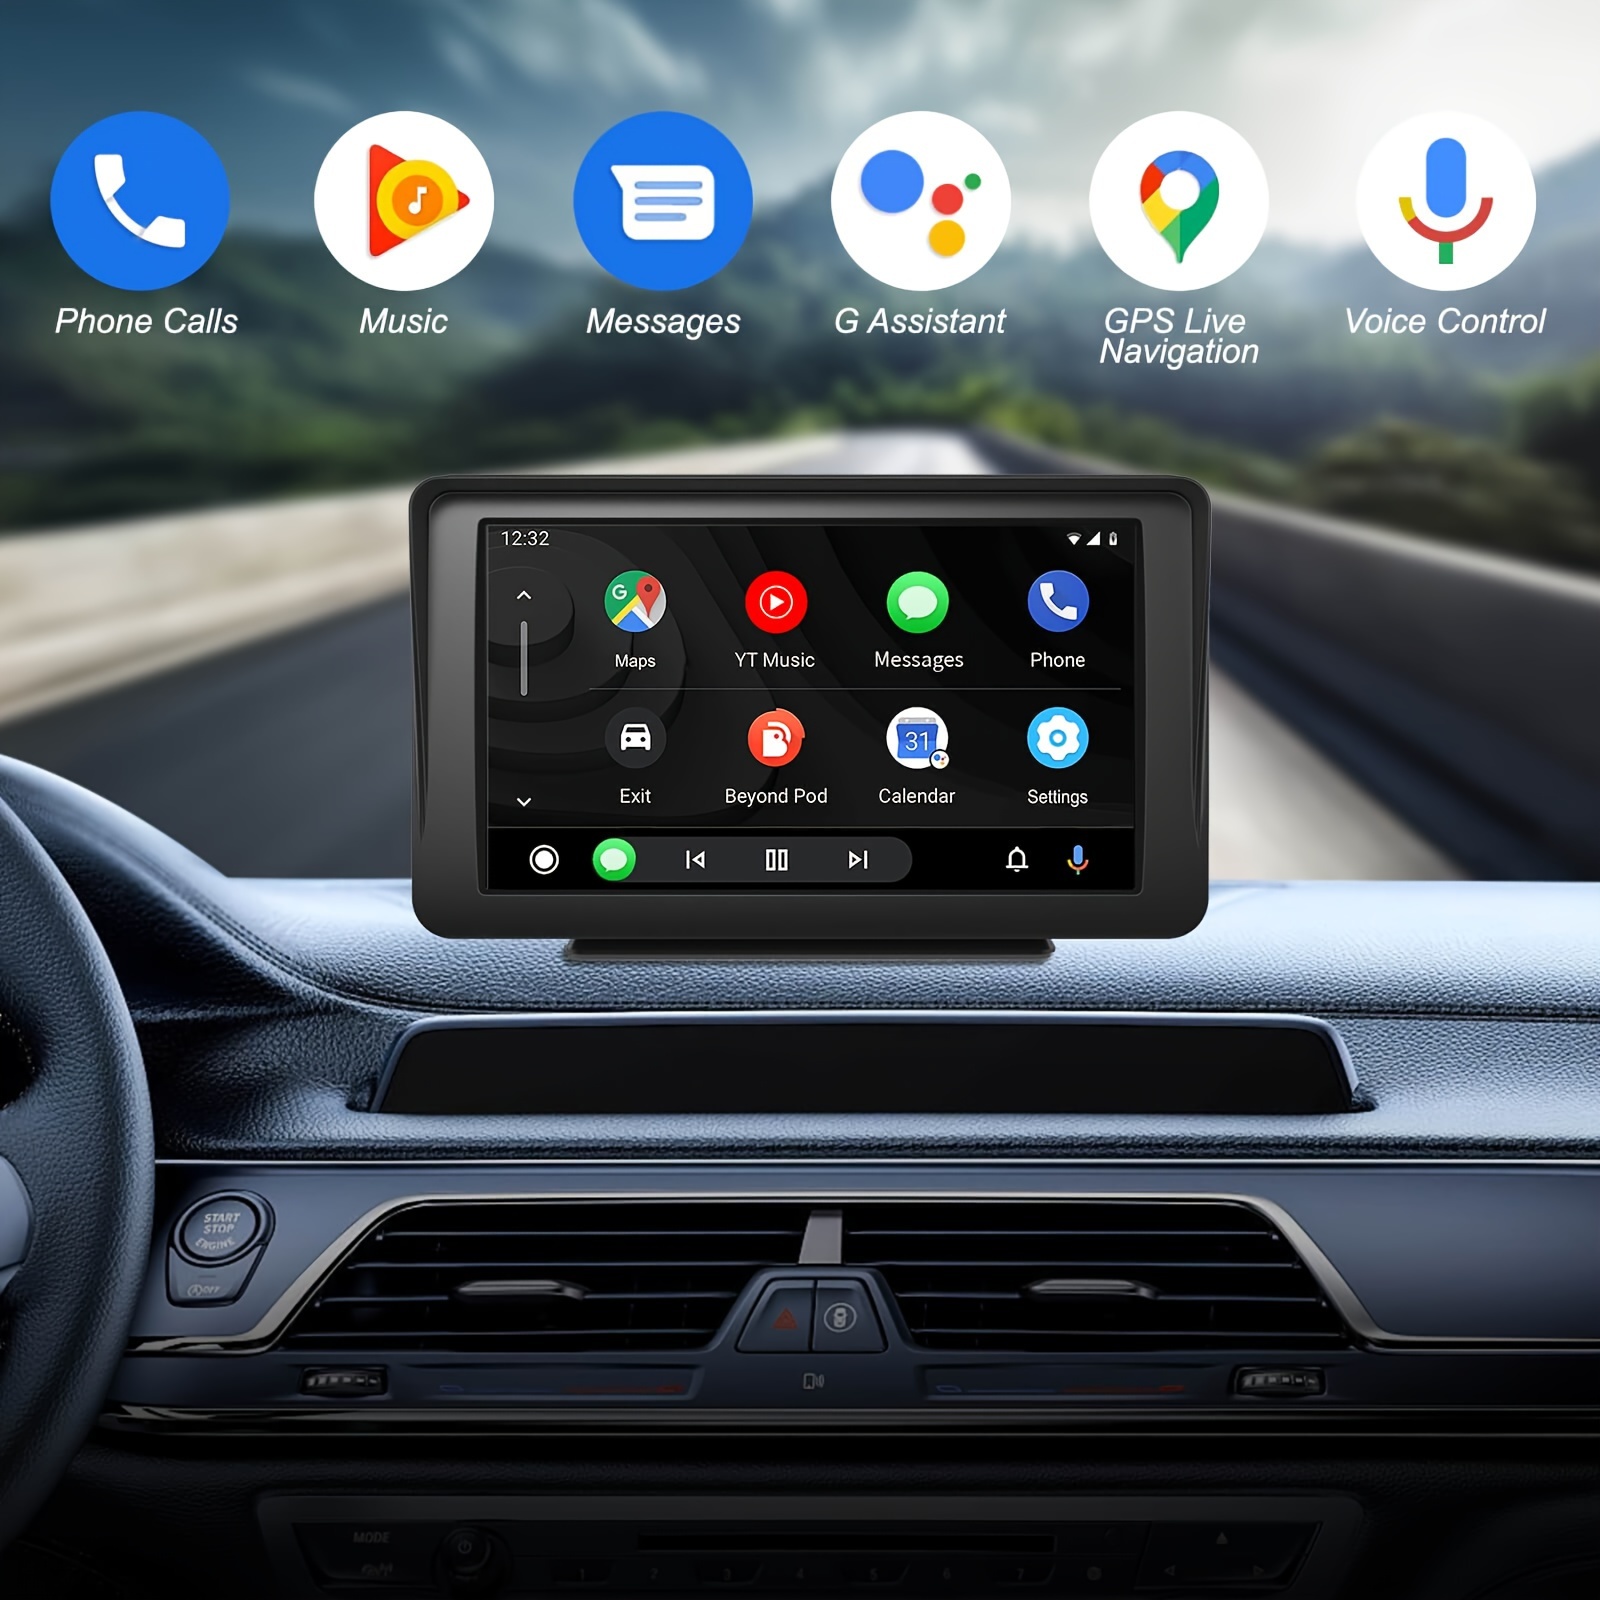 Carplay Inalámbrico Portátil De 7 para IPhone Para Android Auto Pantalla  Táctil IPS 2.5D Con Control De Voz Enlace Espejo Con Cable Airplay WIFI/FM,  Hobele M85 Compatible Con Siri, 9-36V - Temu